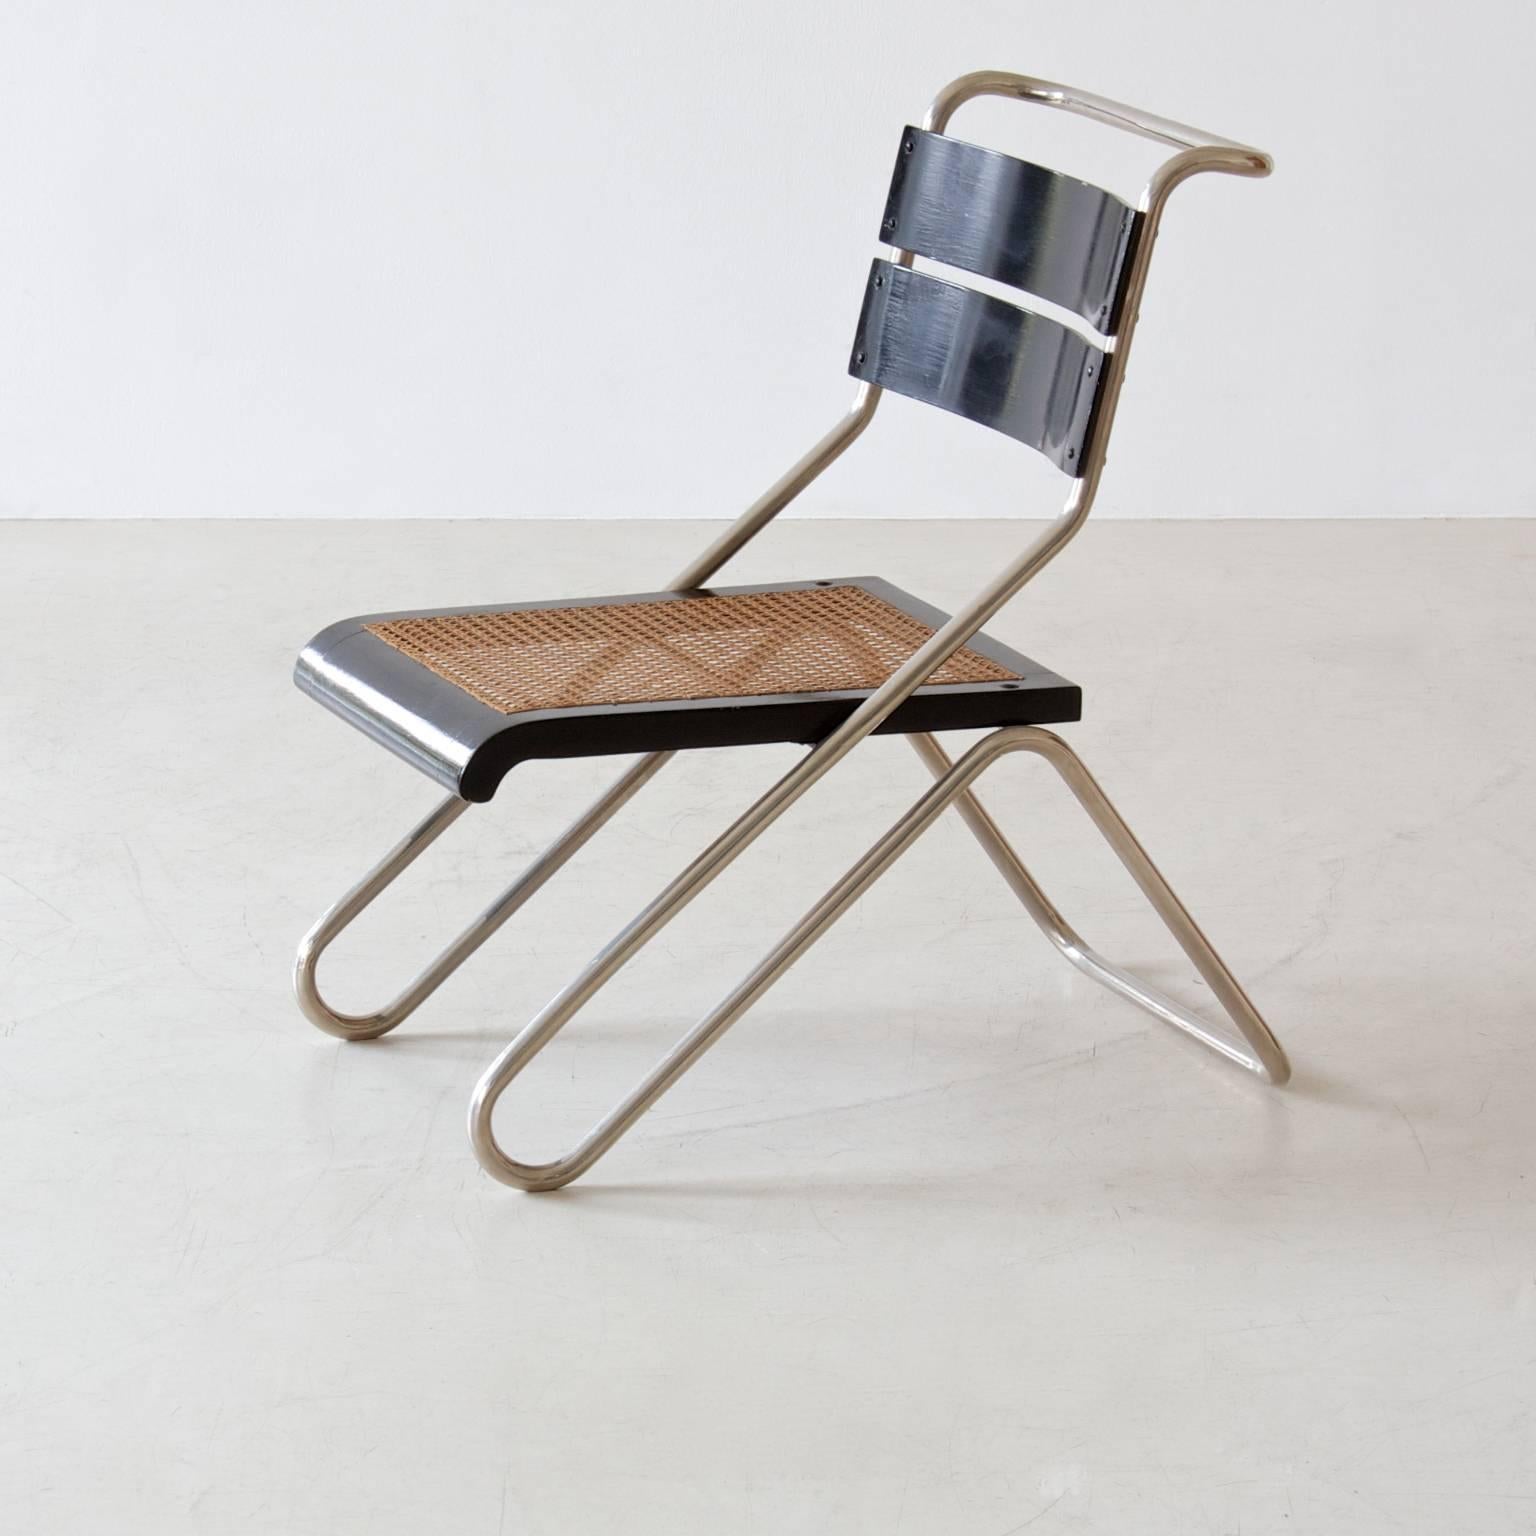 Bauhaus tubular steel chair by Erich Dieckmann, manufactured by Cebaso (Carl Beck & Alfred Schulze AG), Ondurf, Türingen, Germany, 1931.